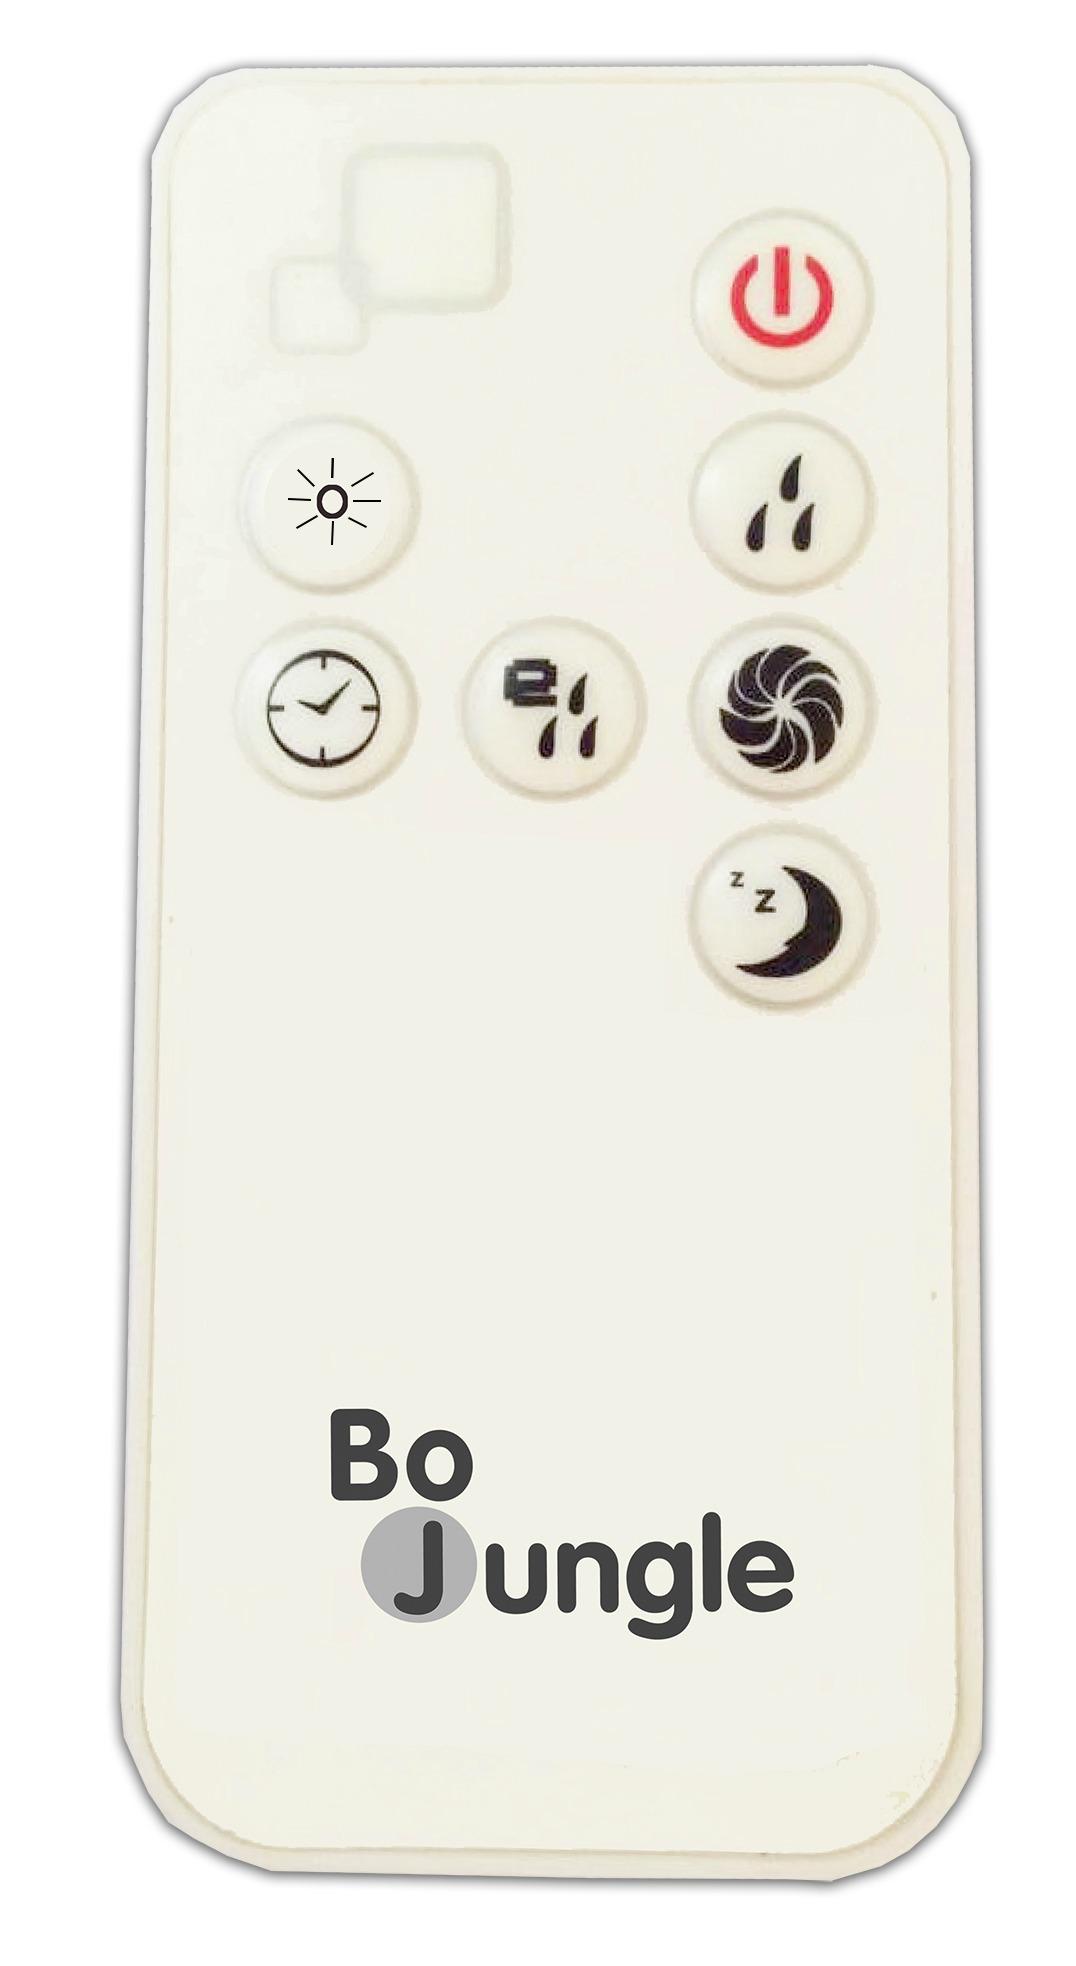 image - Bo Jungle B-Digital Humi-Purifier with Aroma Ψηφιακός Υγραντήρας-Ιονιστής Με Άρωμα Λευκό 0+ΜB.200600 